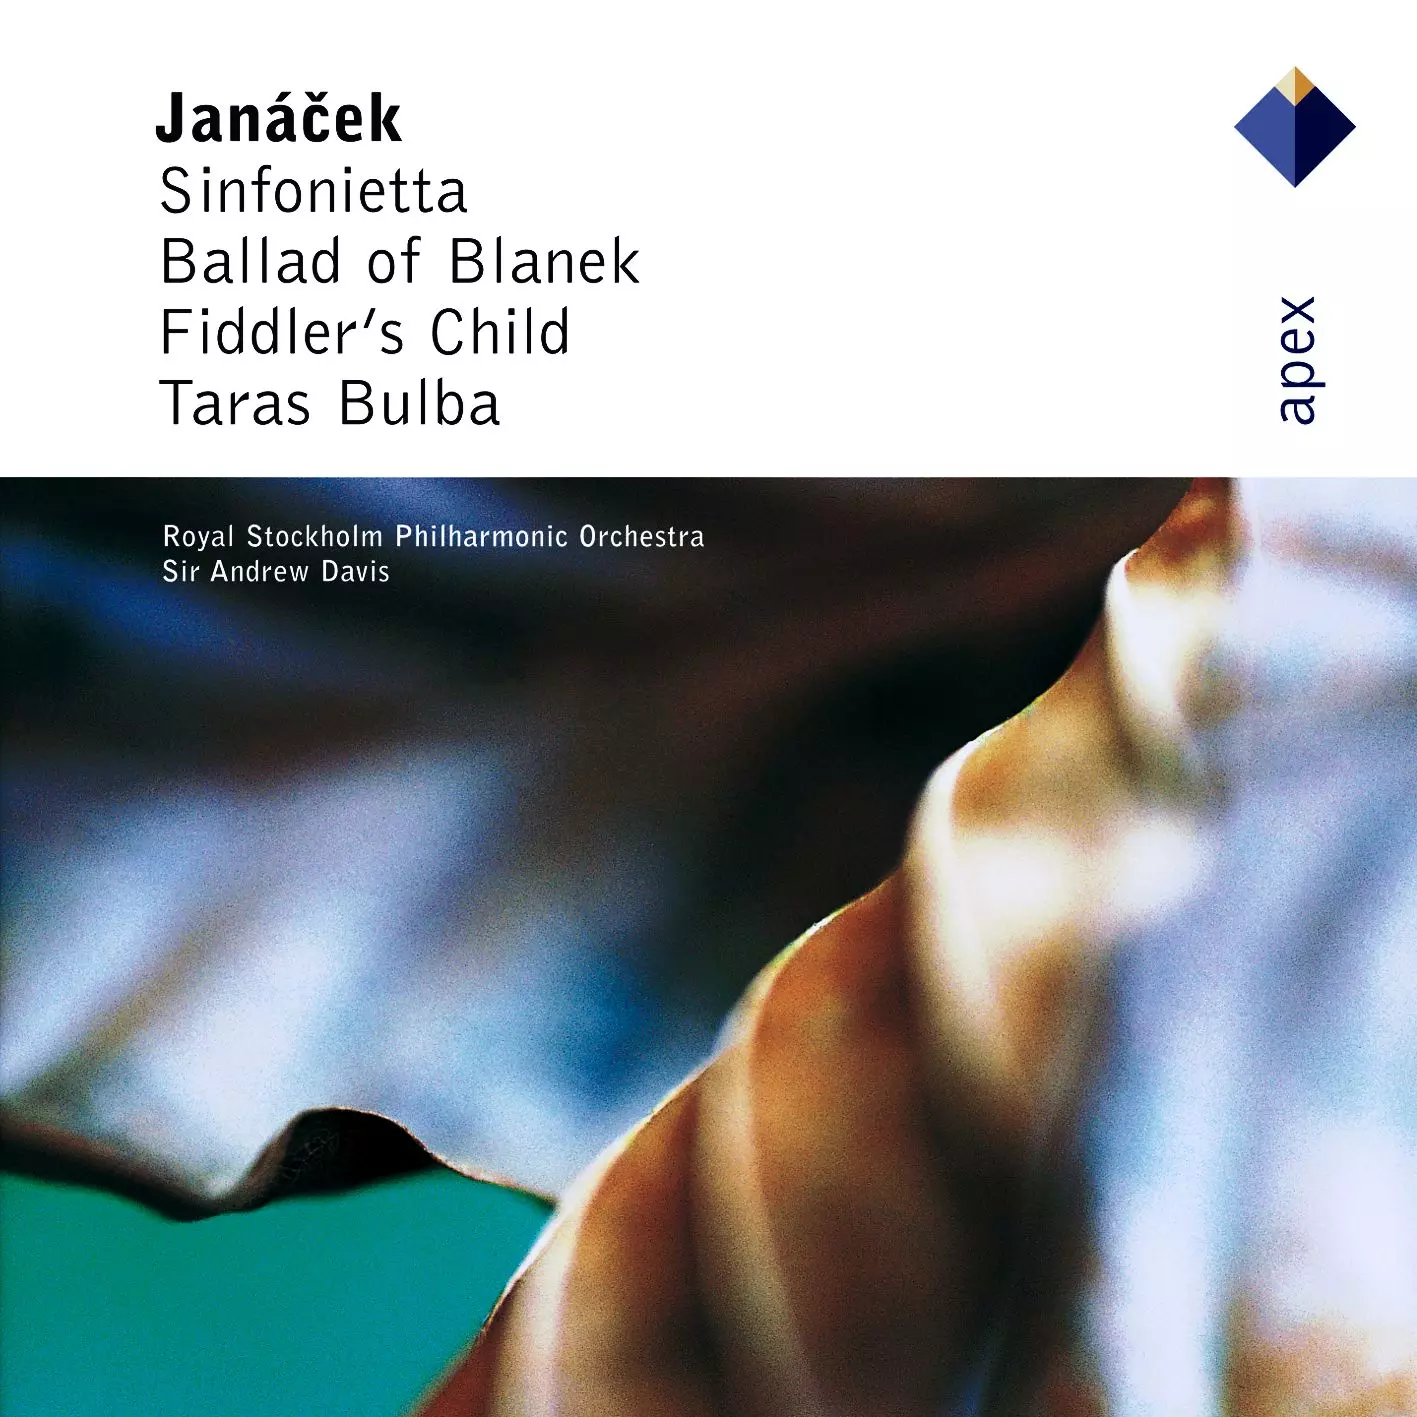 Apex: Janacek Orchestral Works